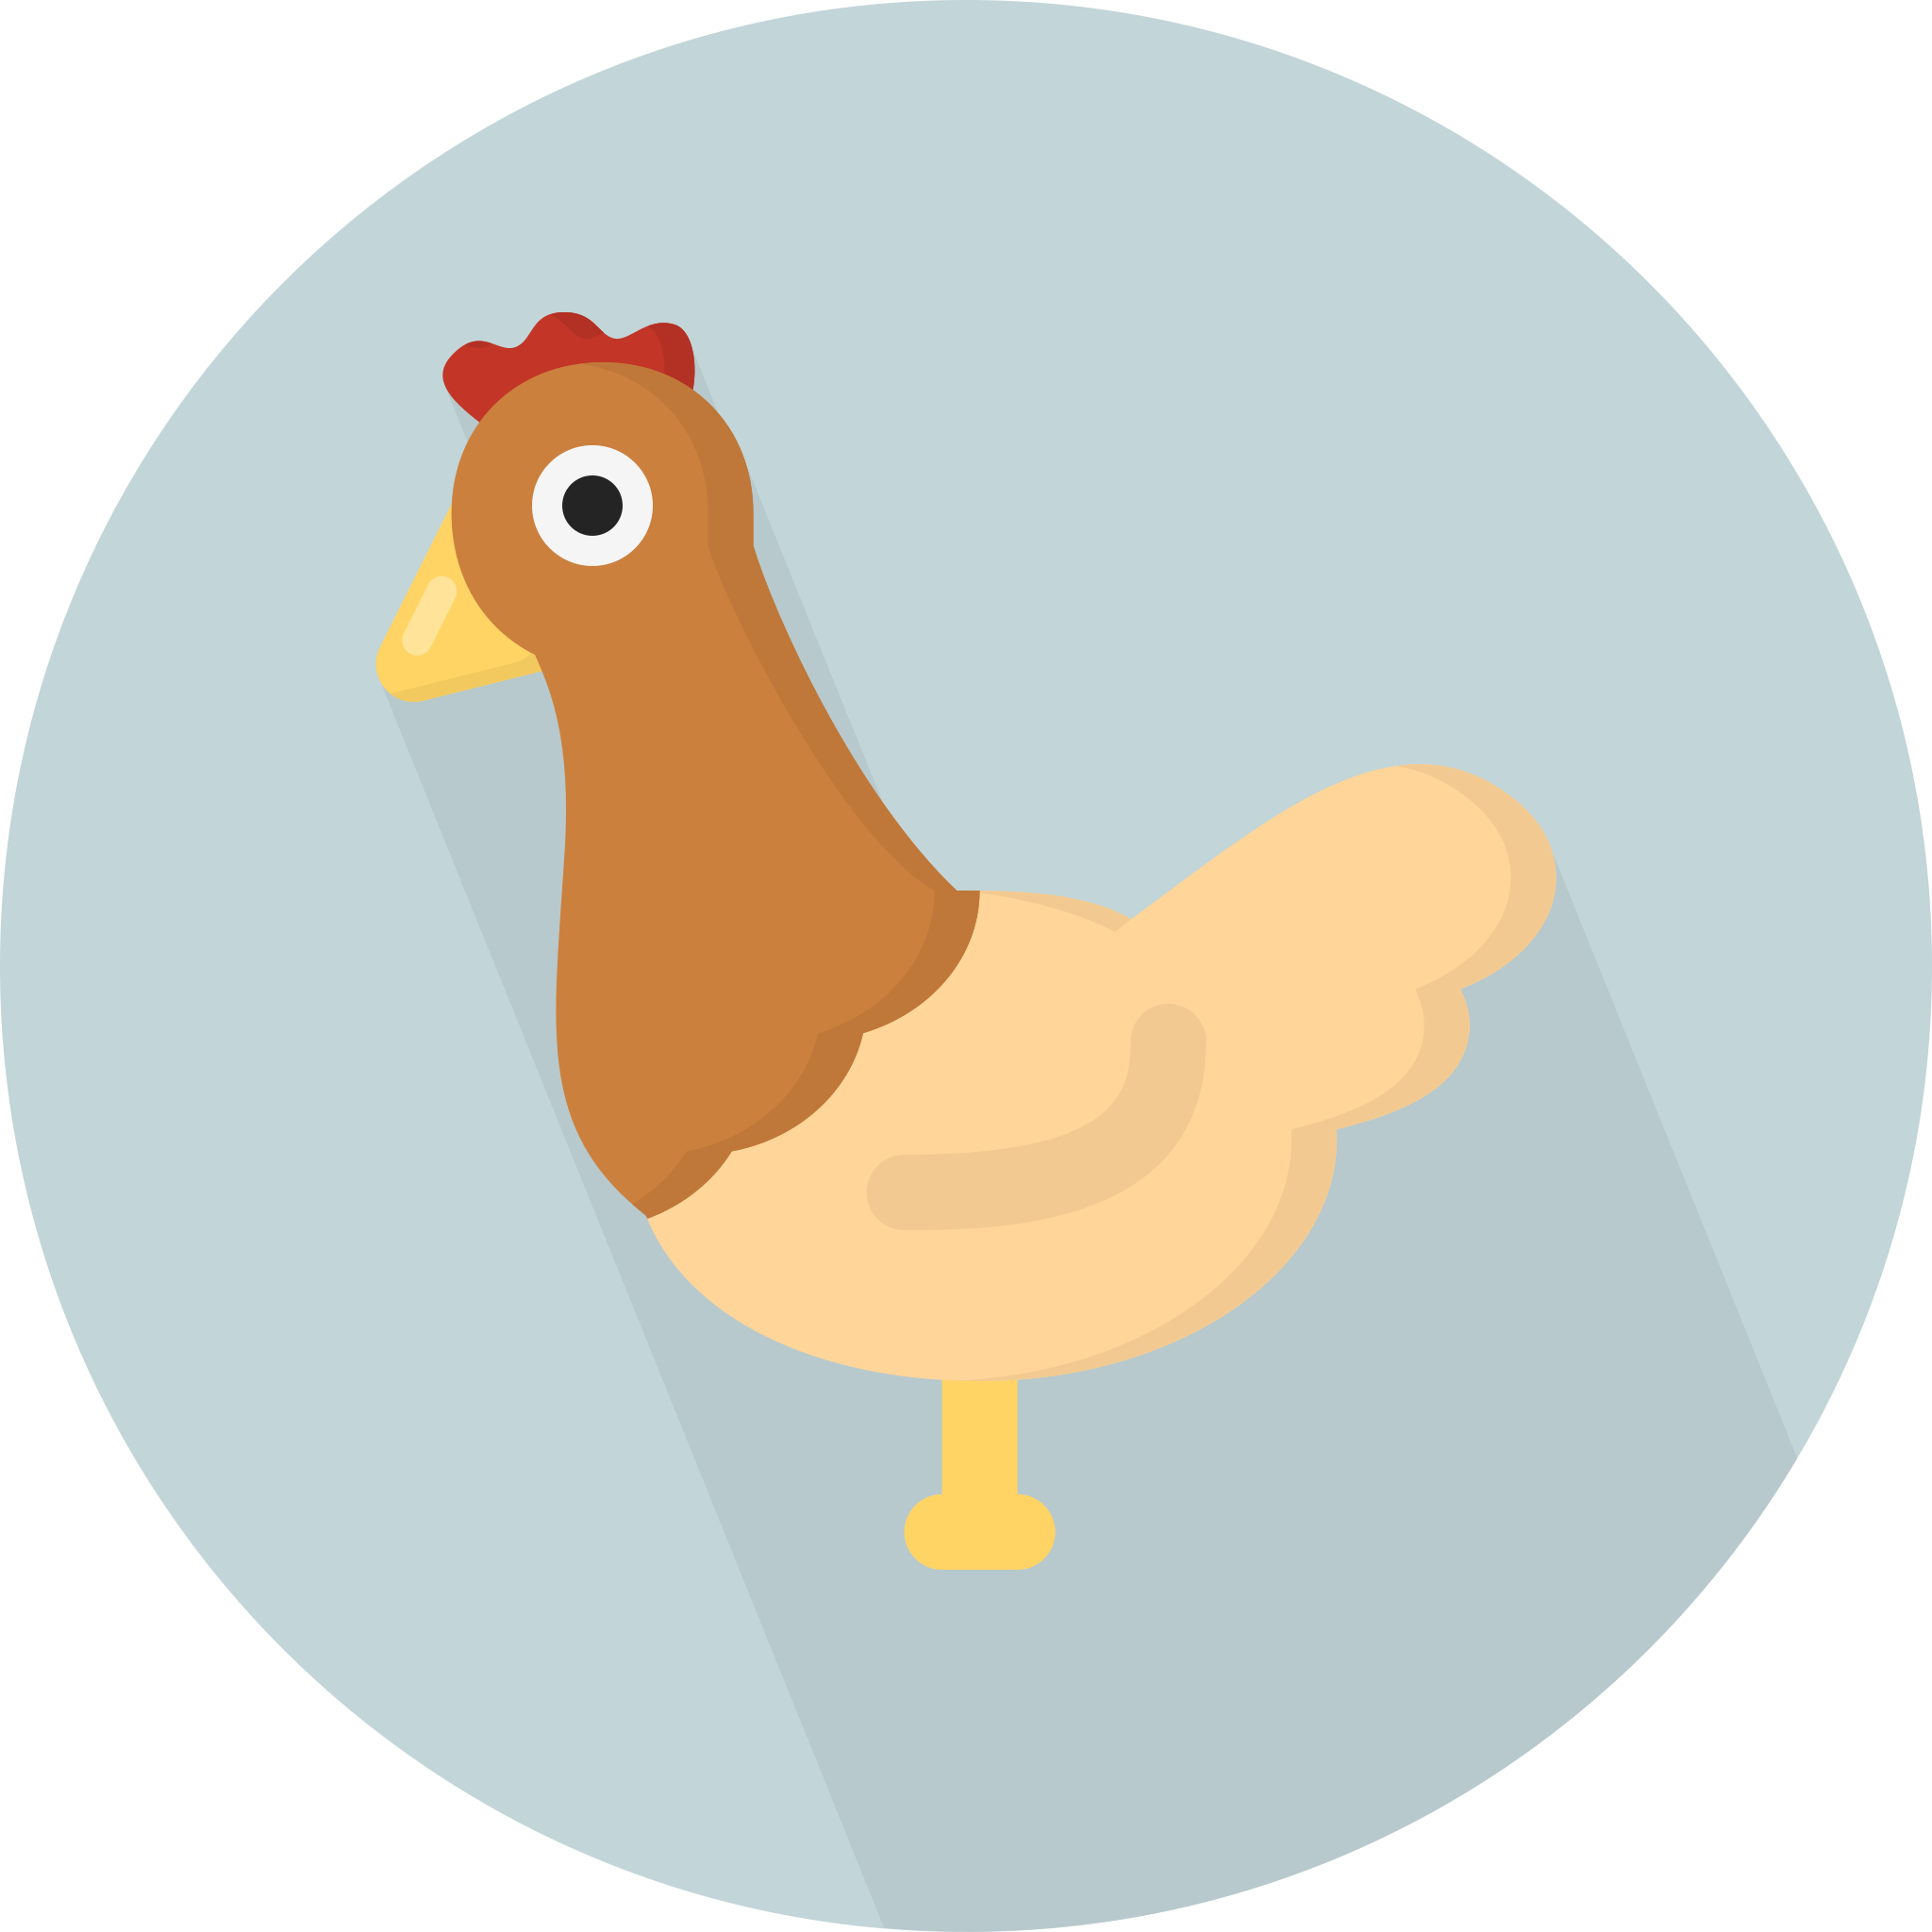 File:Creative-Tail-Animal-chicken.svg - Wikipedia